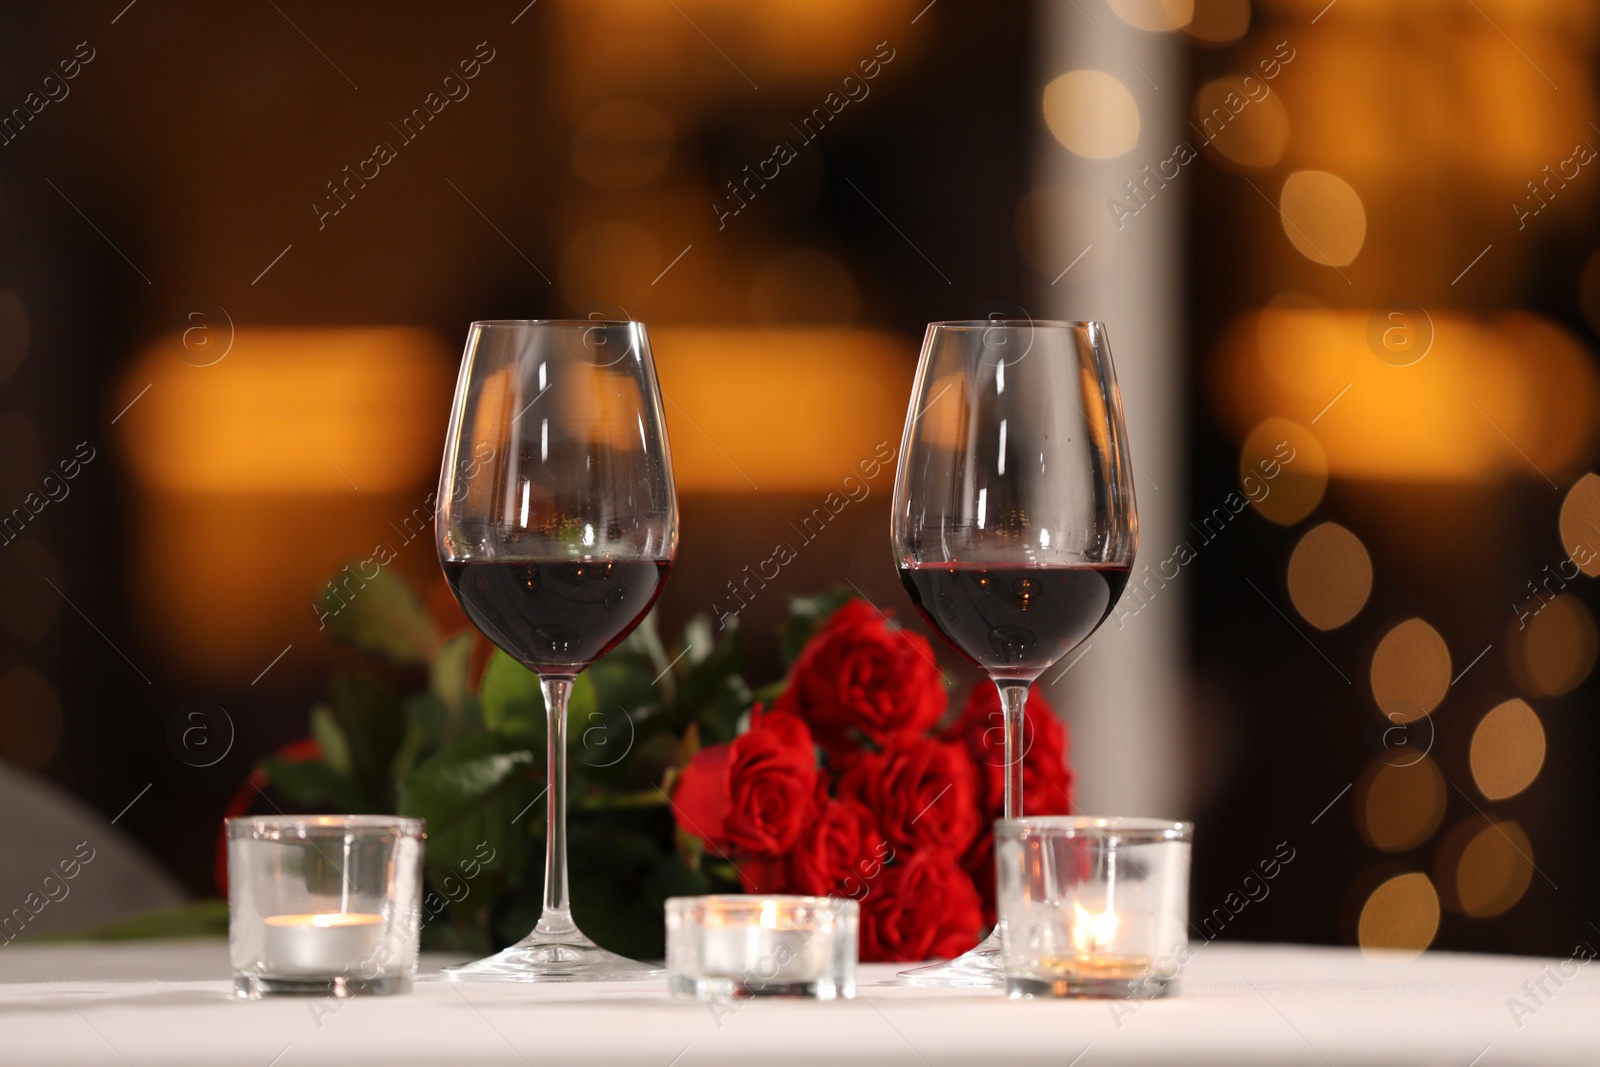 Photo of Glasses of wine for romantic dinner on table in restaurant